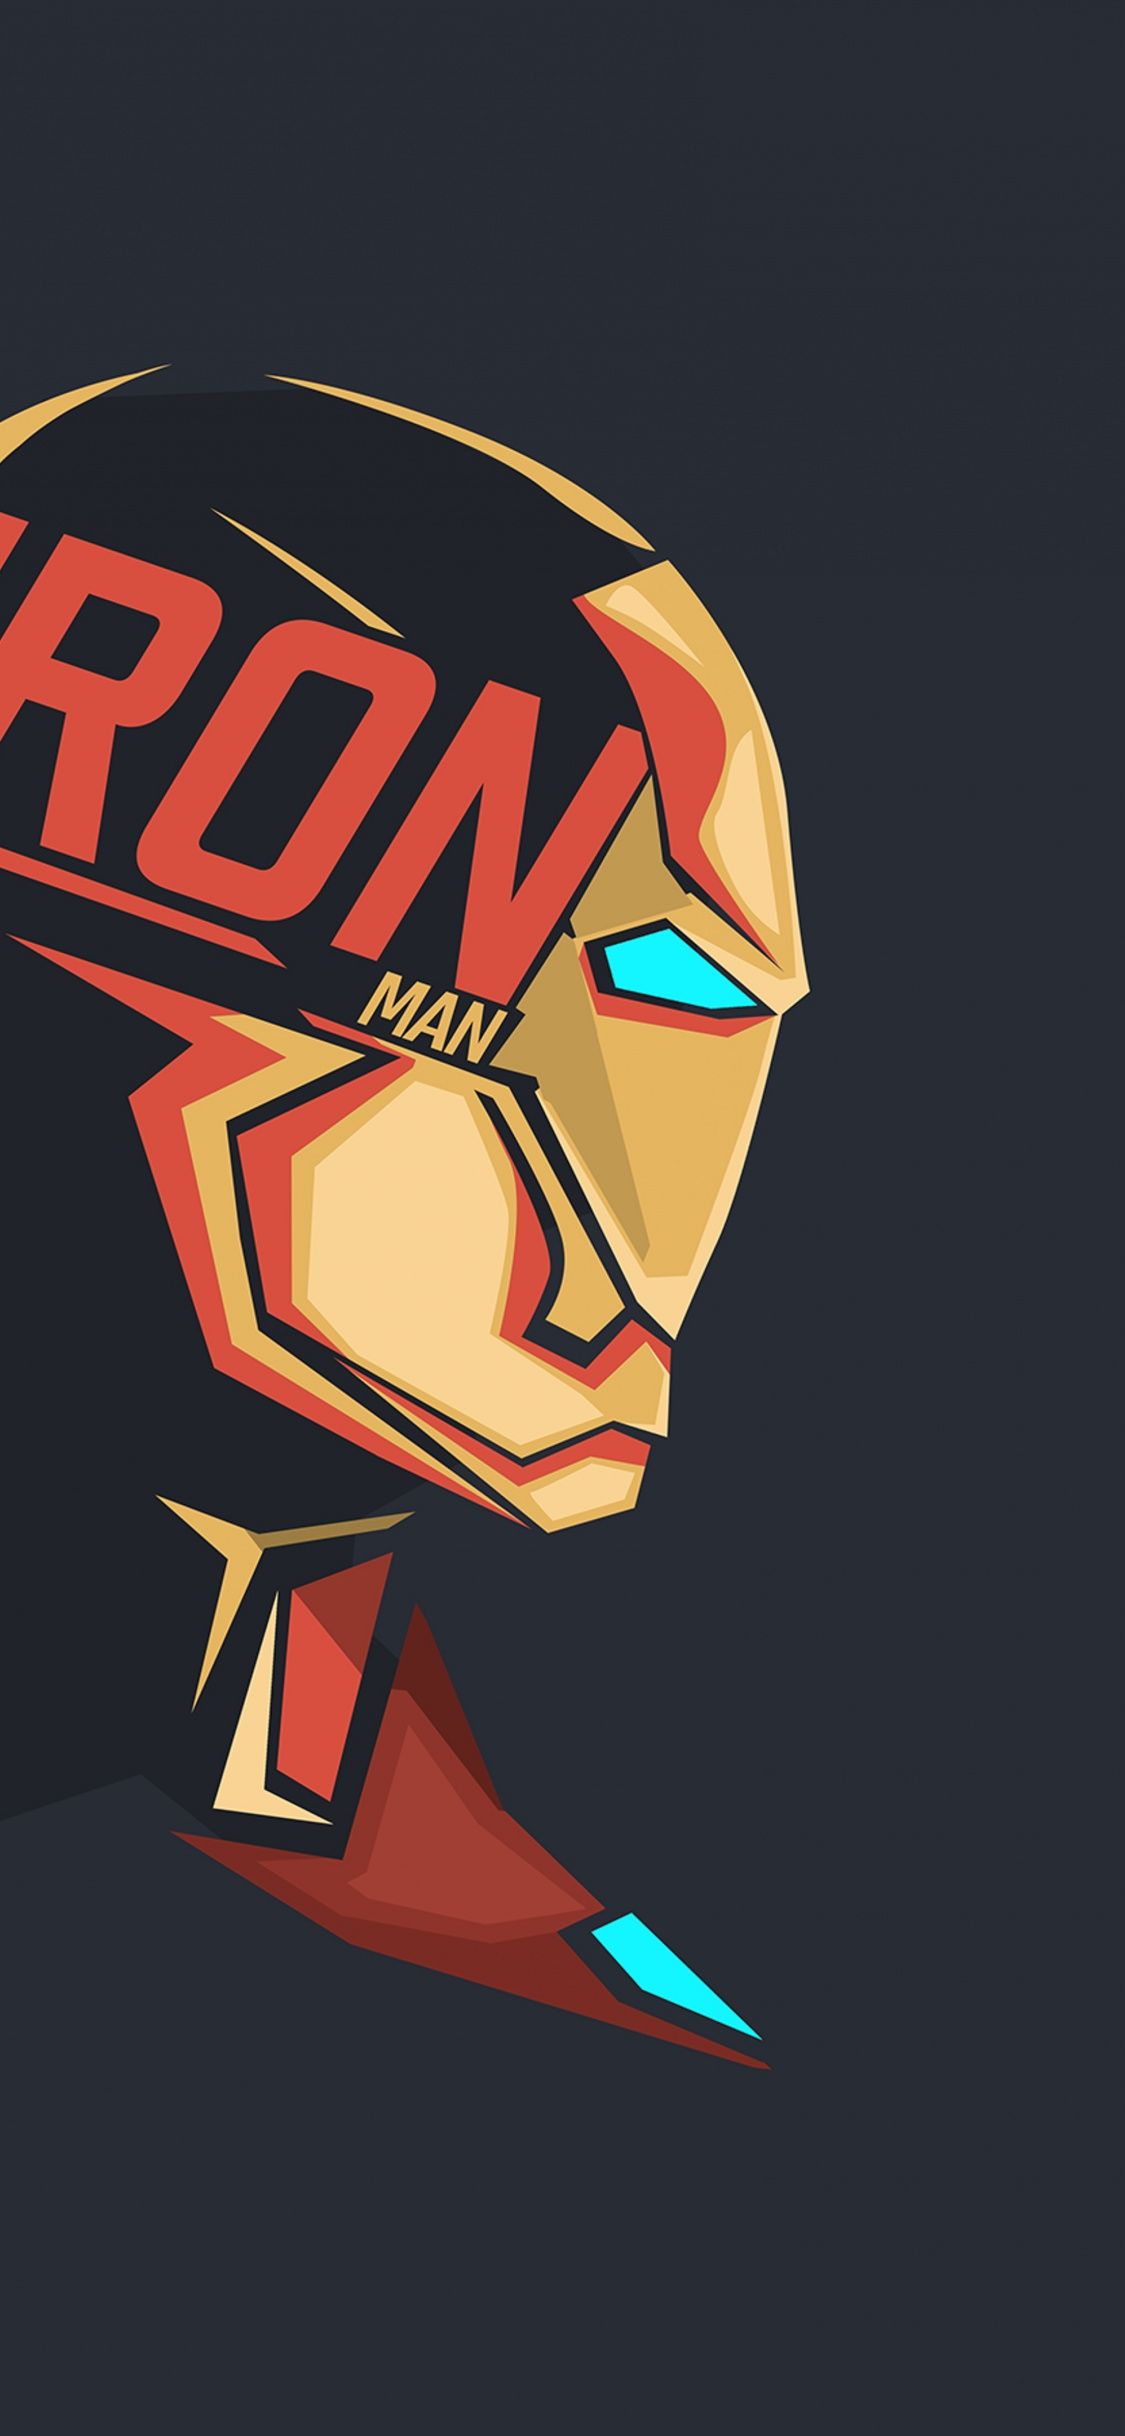 Free download Download 1125x2436 wallpaper headshot superhero marvel iron man [1125x2436] for your Desktop, Mobile & Tablet. Explore Iron Man iPhone X Wallpaper. Iron Man iPhone X Wallpaper, iPhone